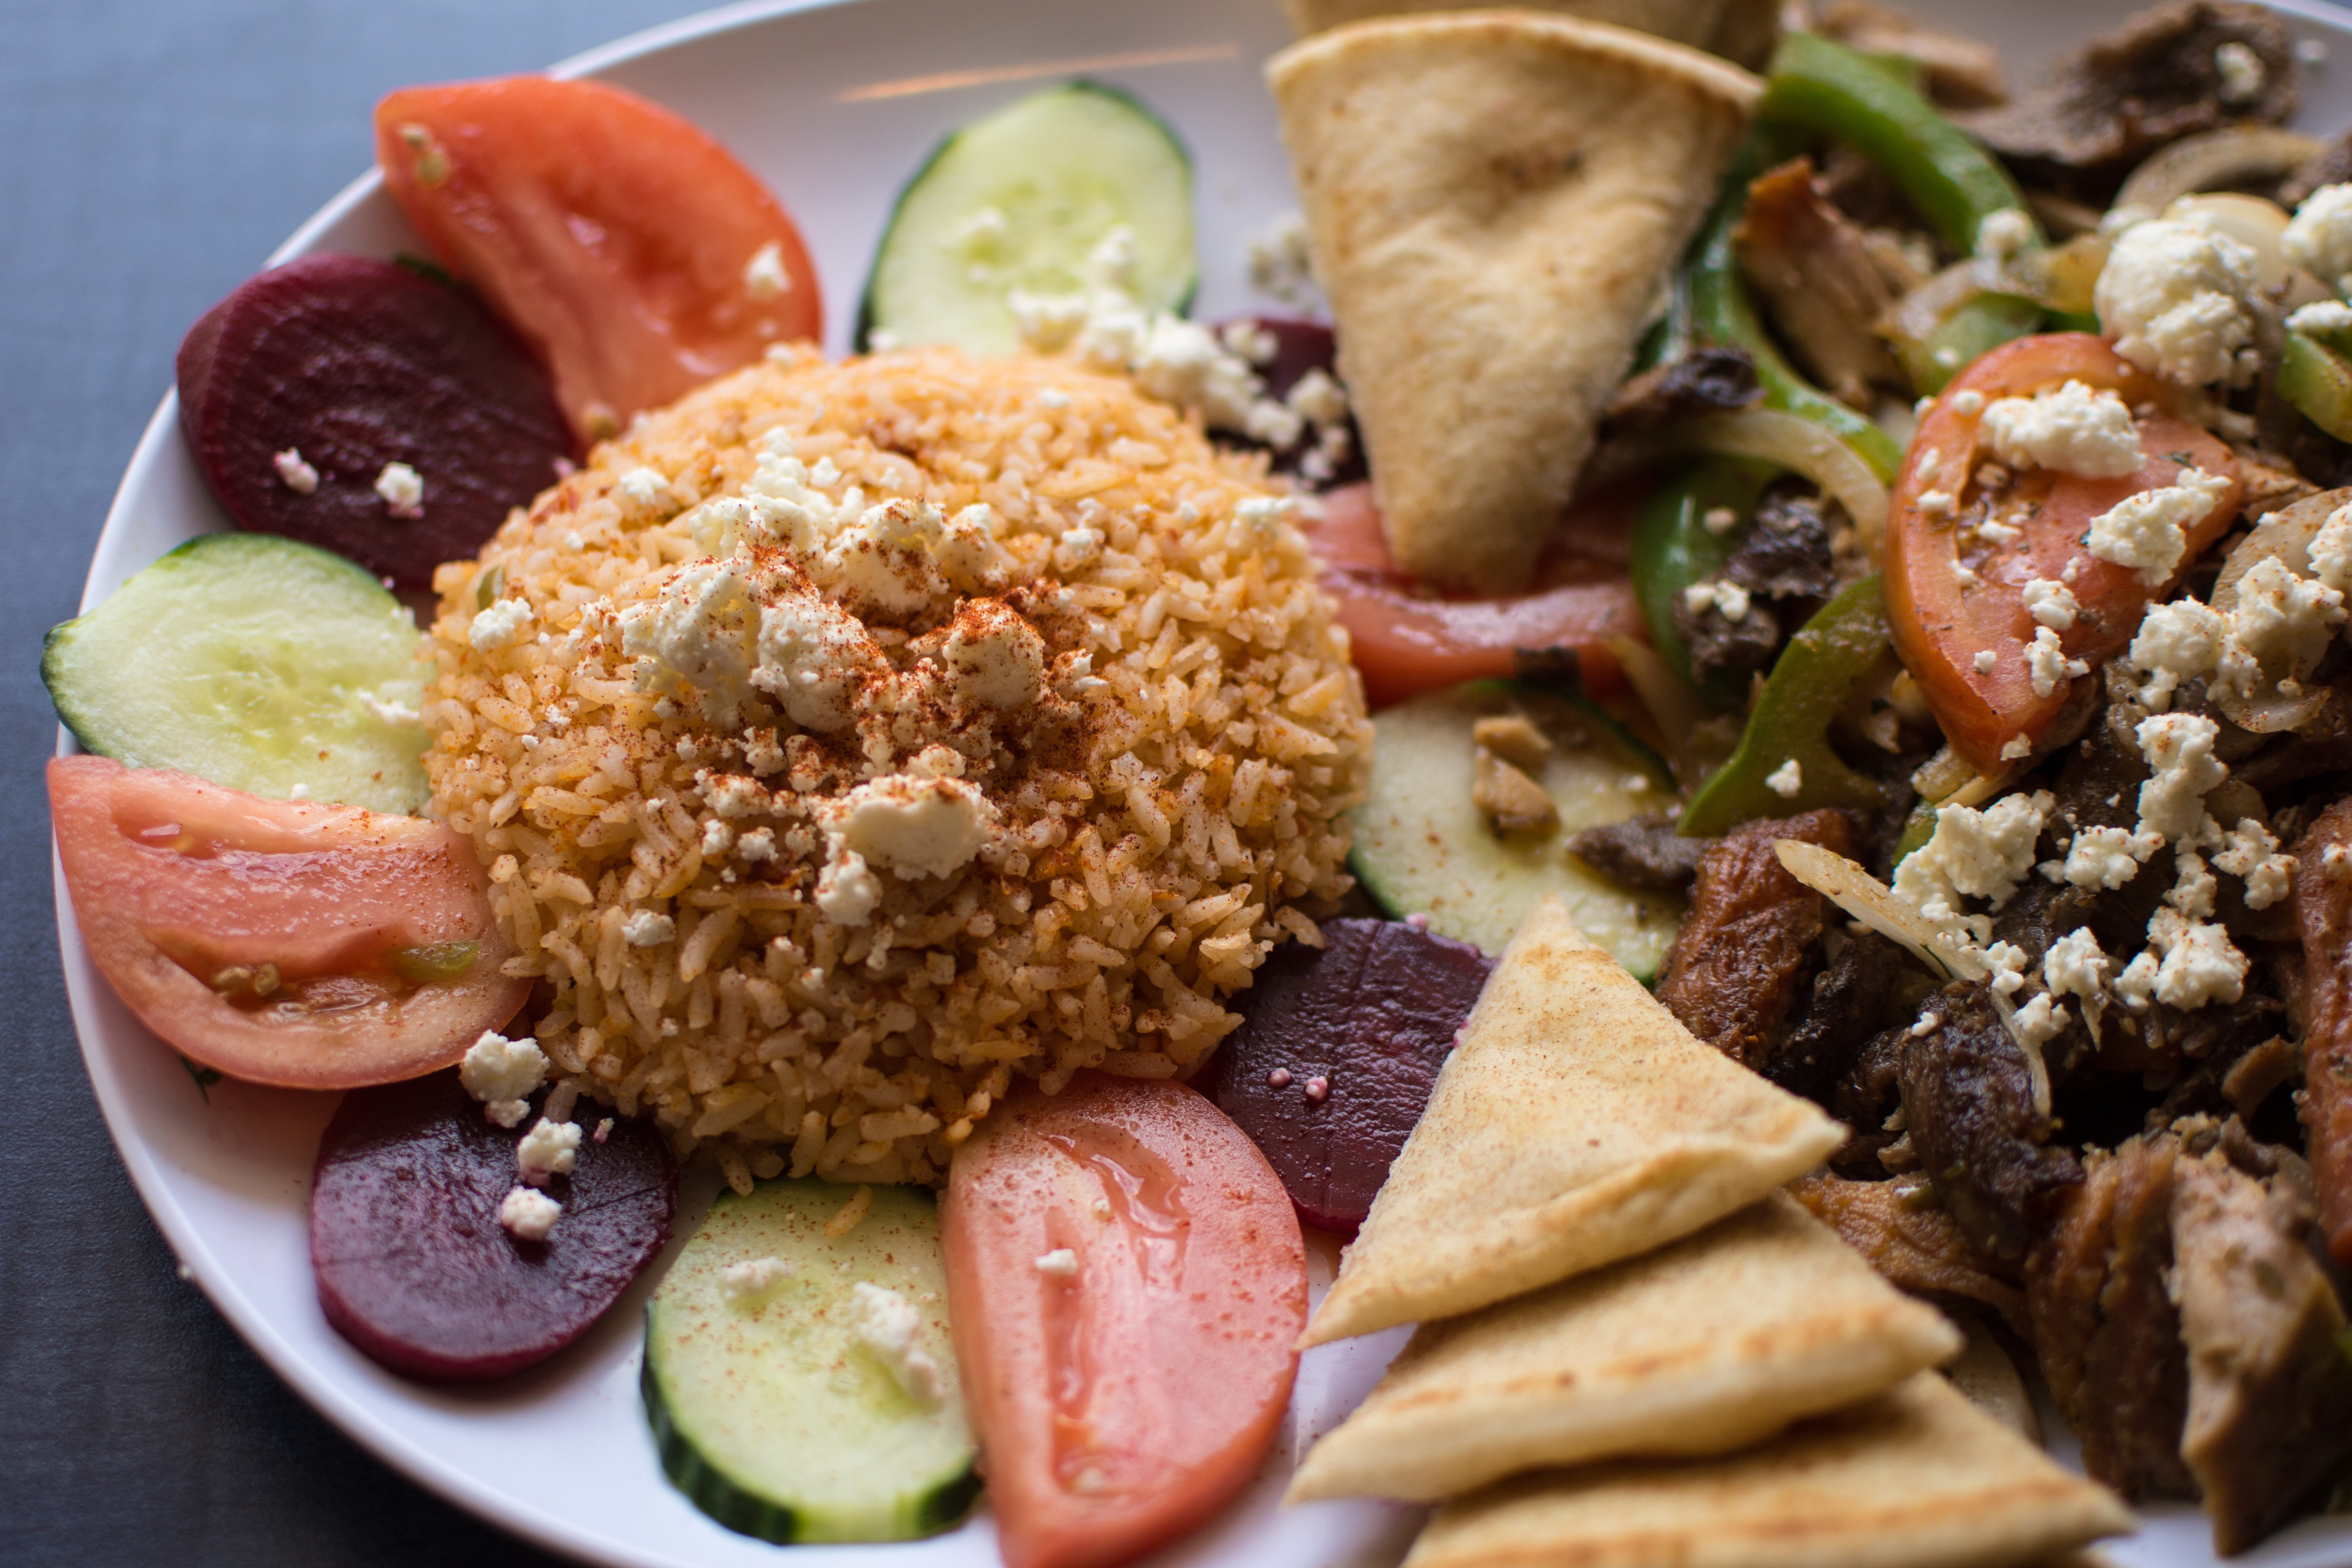 authentic greek, greek food, mezes, food and drink, meal, vegetable